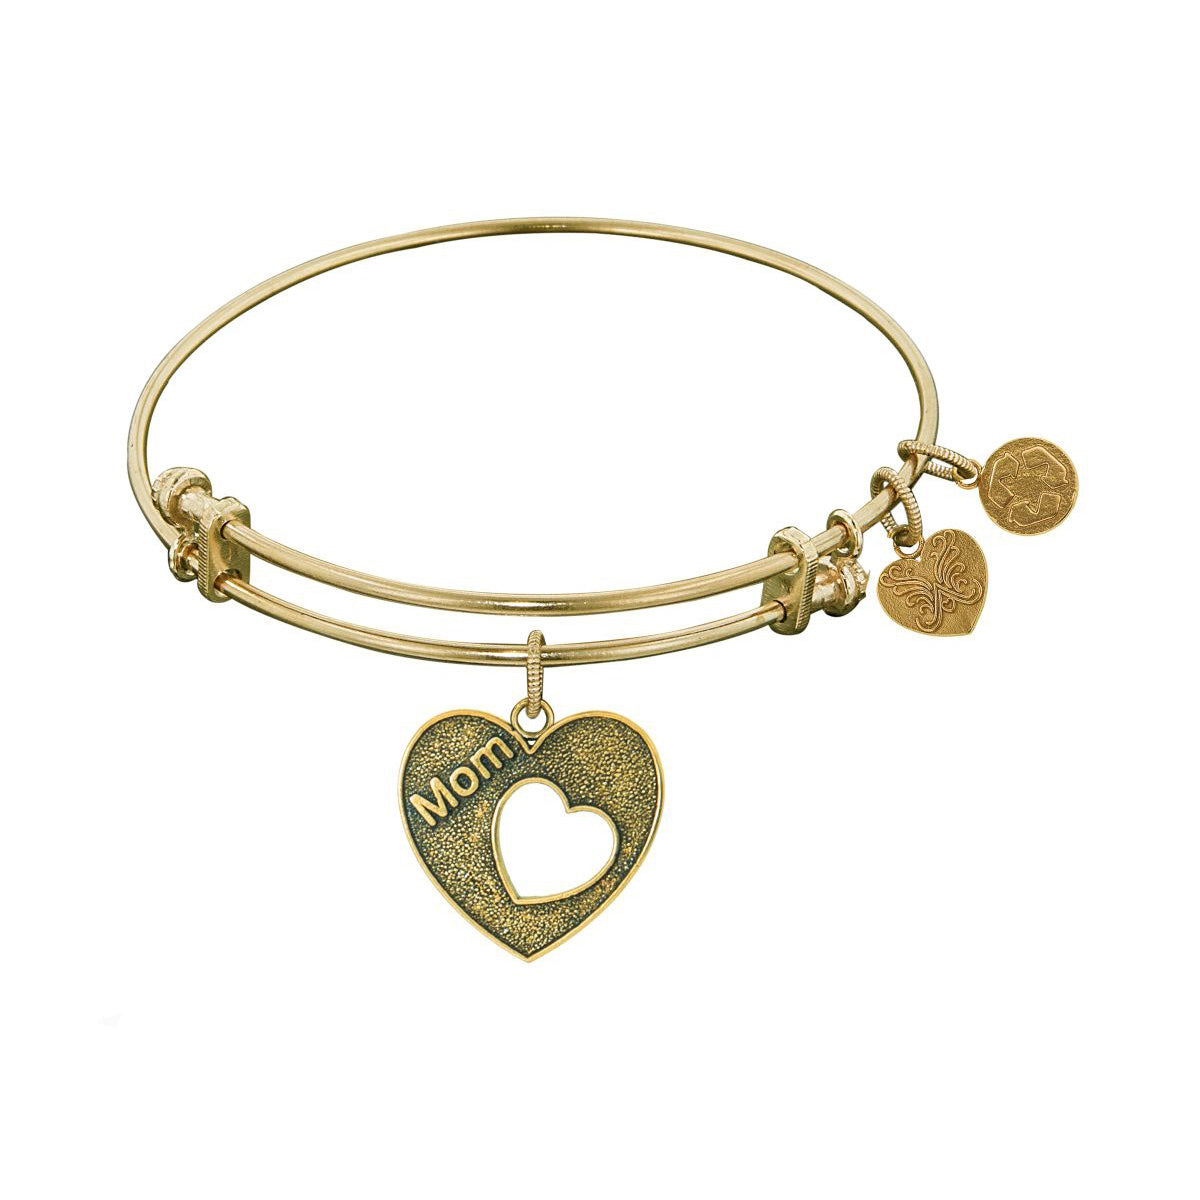 Stipple Finish Brass Heart With Mom Open Heart Angelica Bangle Bracelet, 7.25"